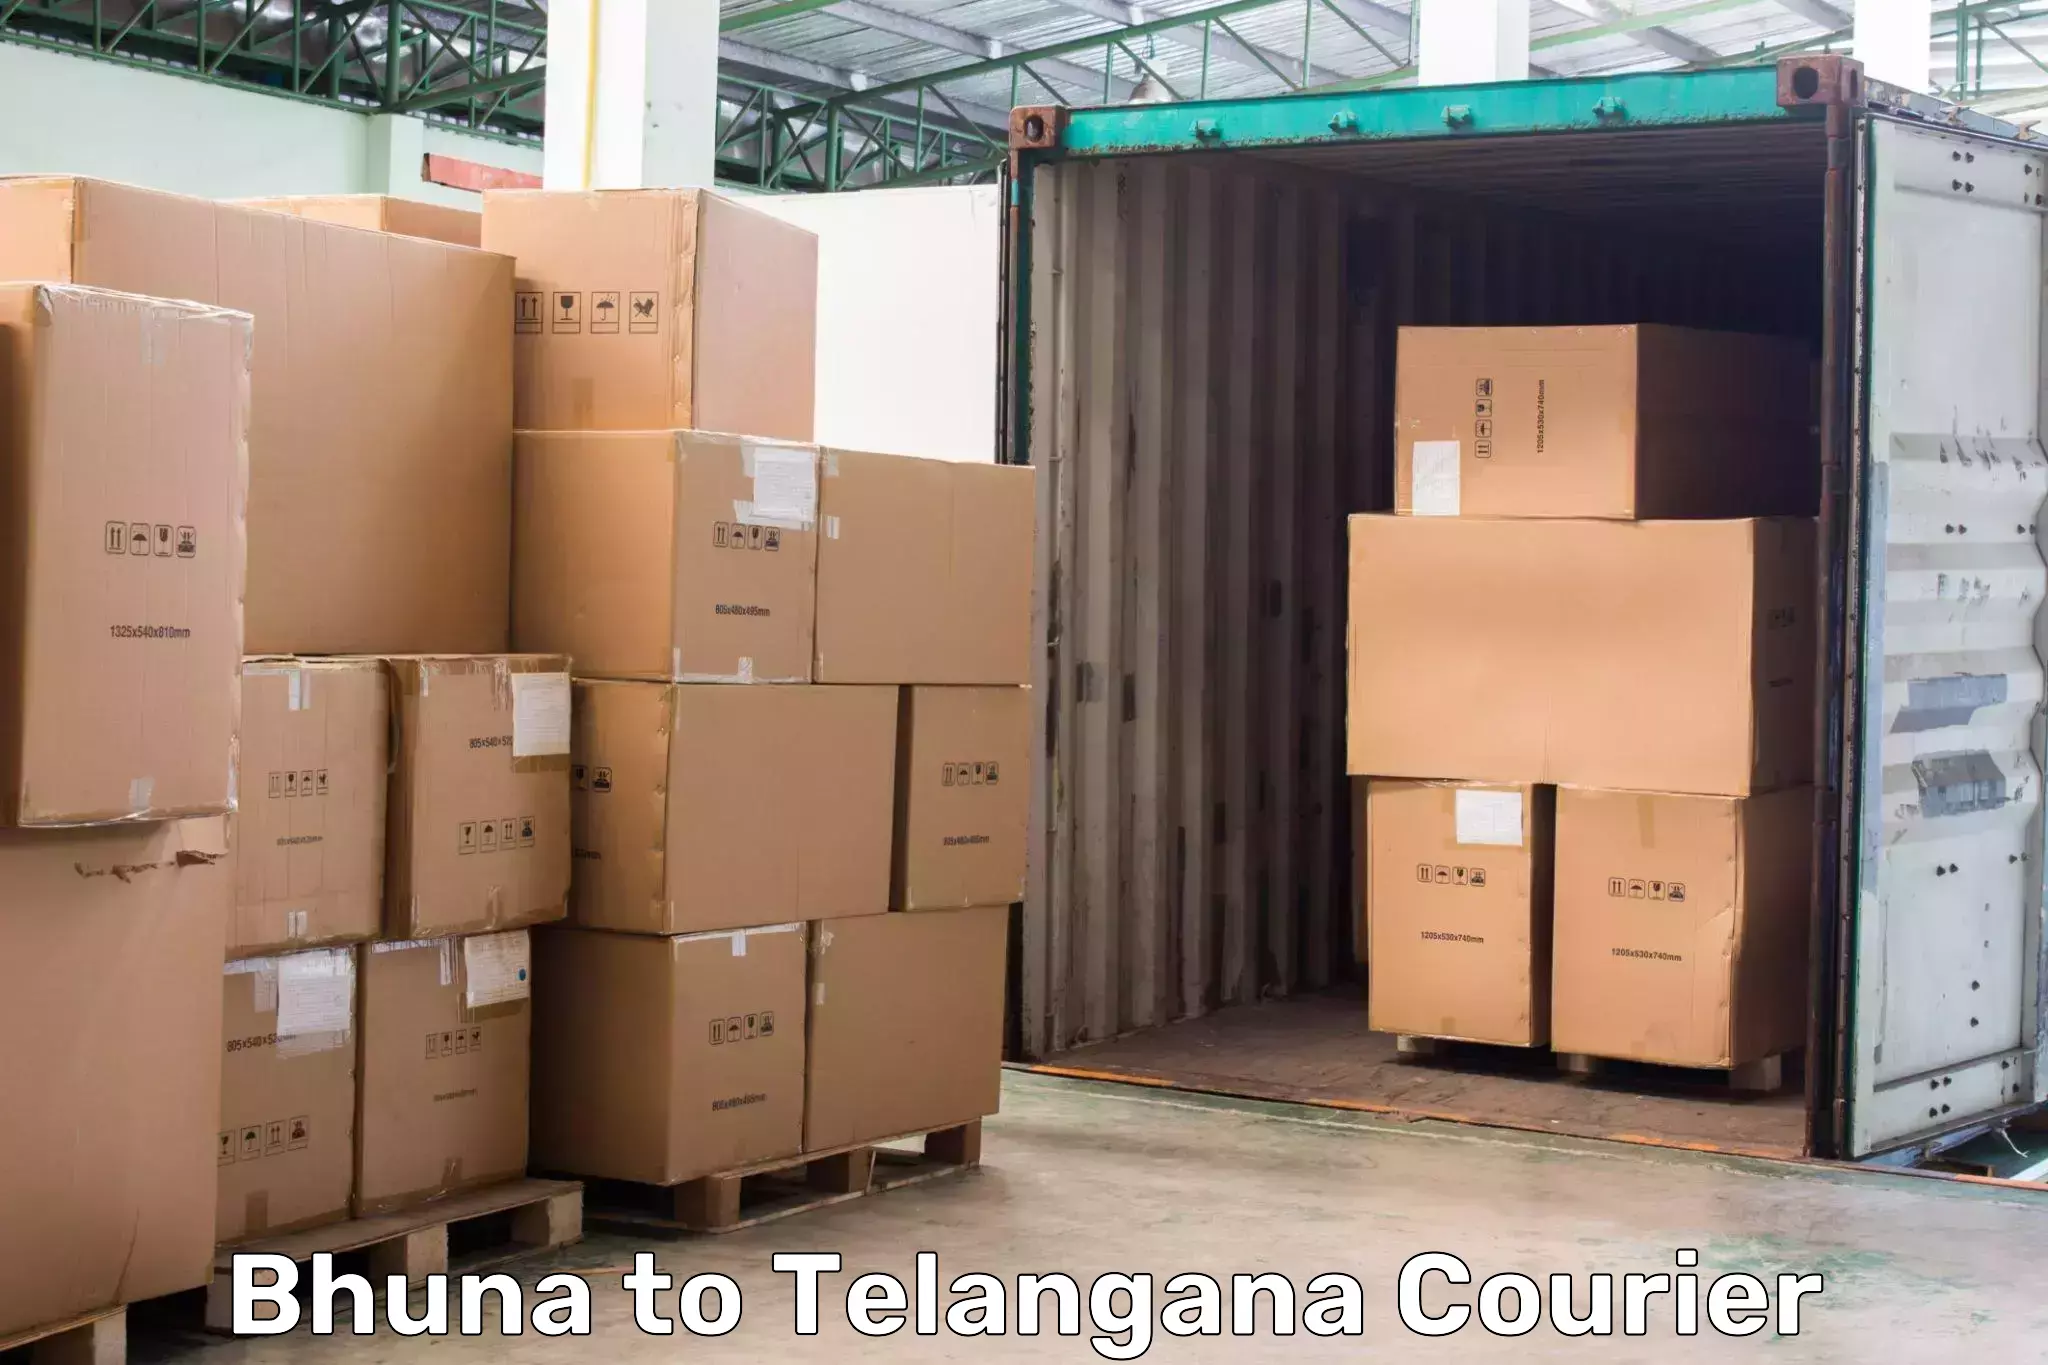 Urgent courier needs Bhuna to Manuguru